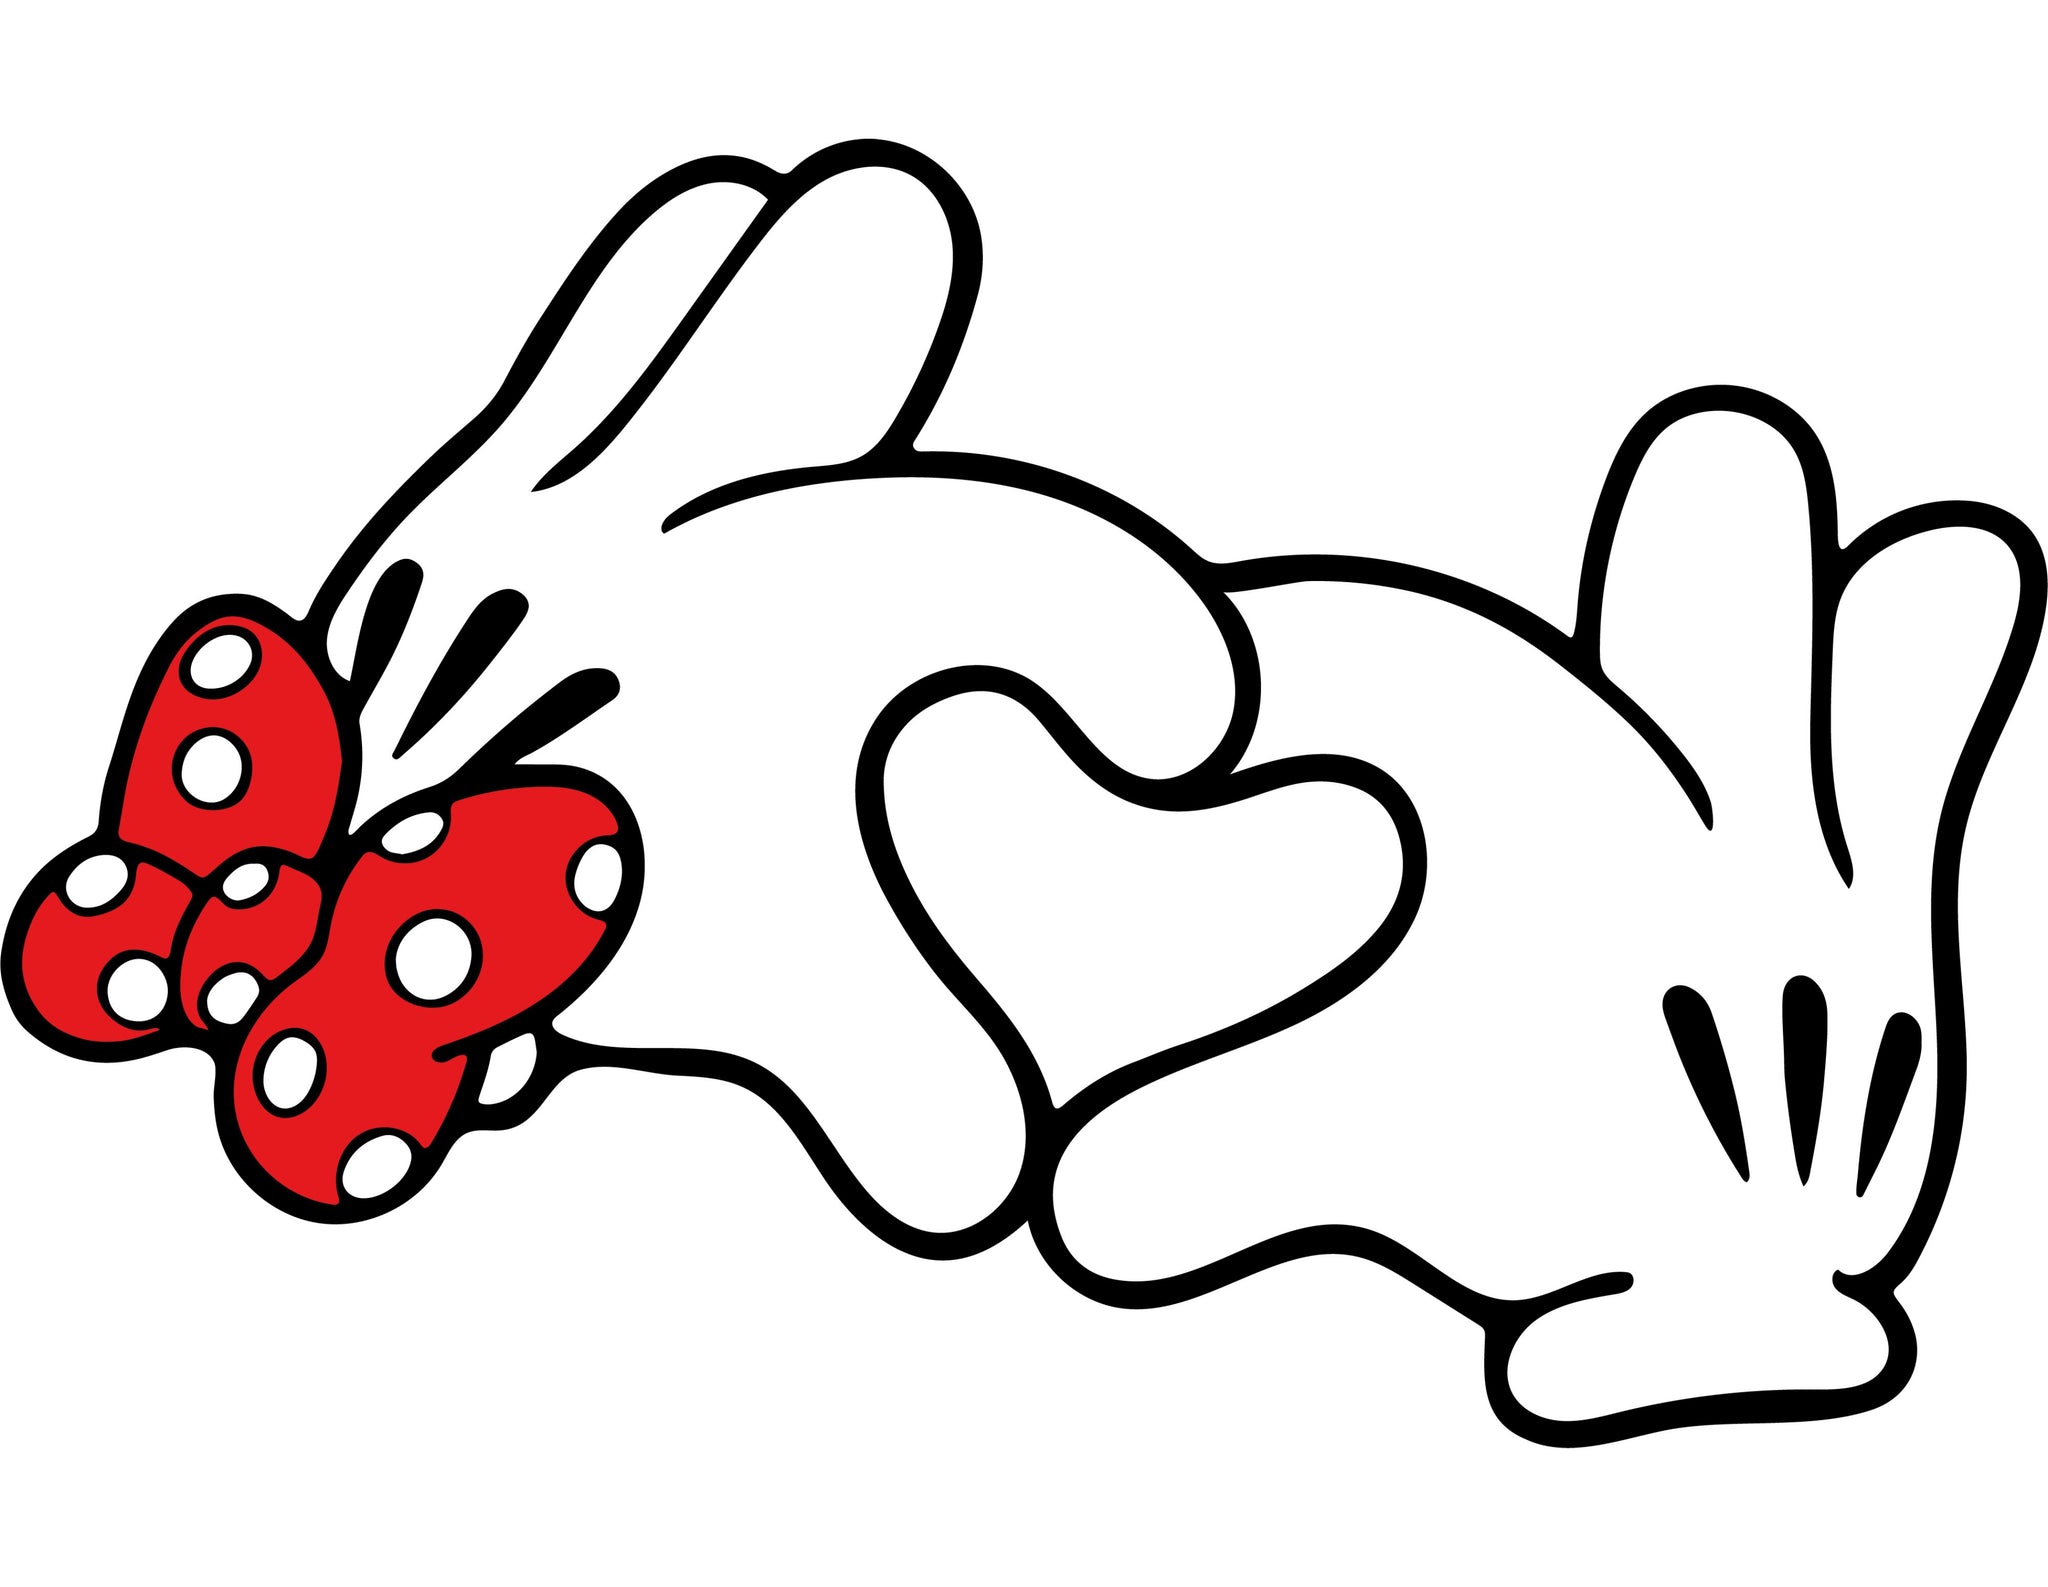 Disney Heart Hands Valentine's Day SVG - Instant Download